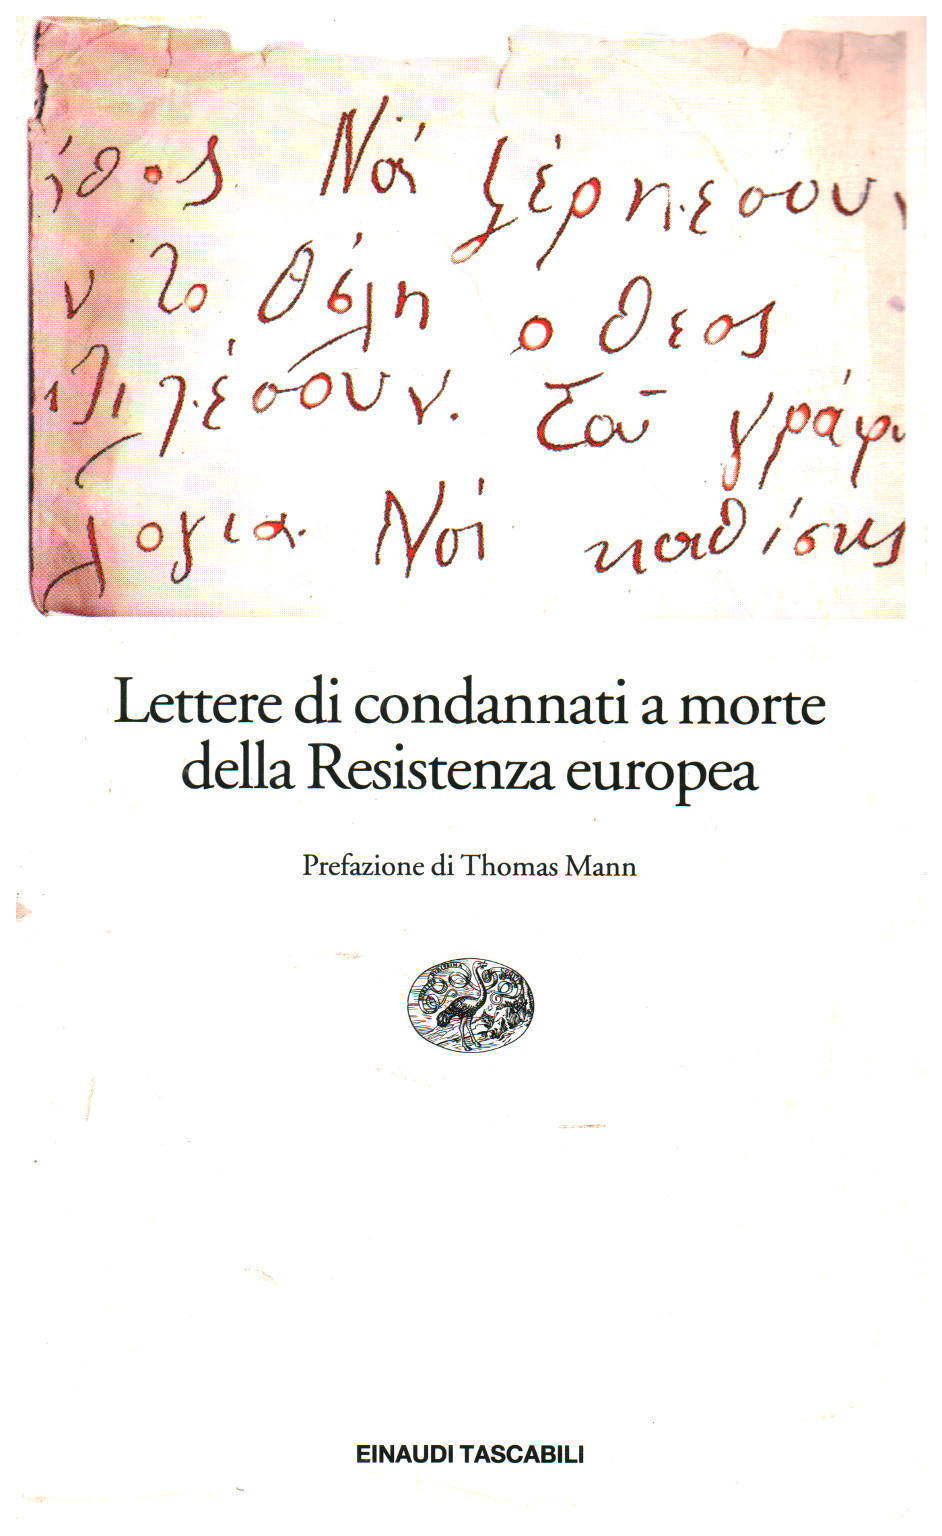 Letters of sentenced to death of the Resistance eur, Piero Malvezzi Giovanni Pirelli